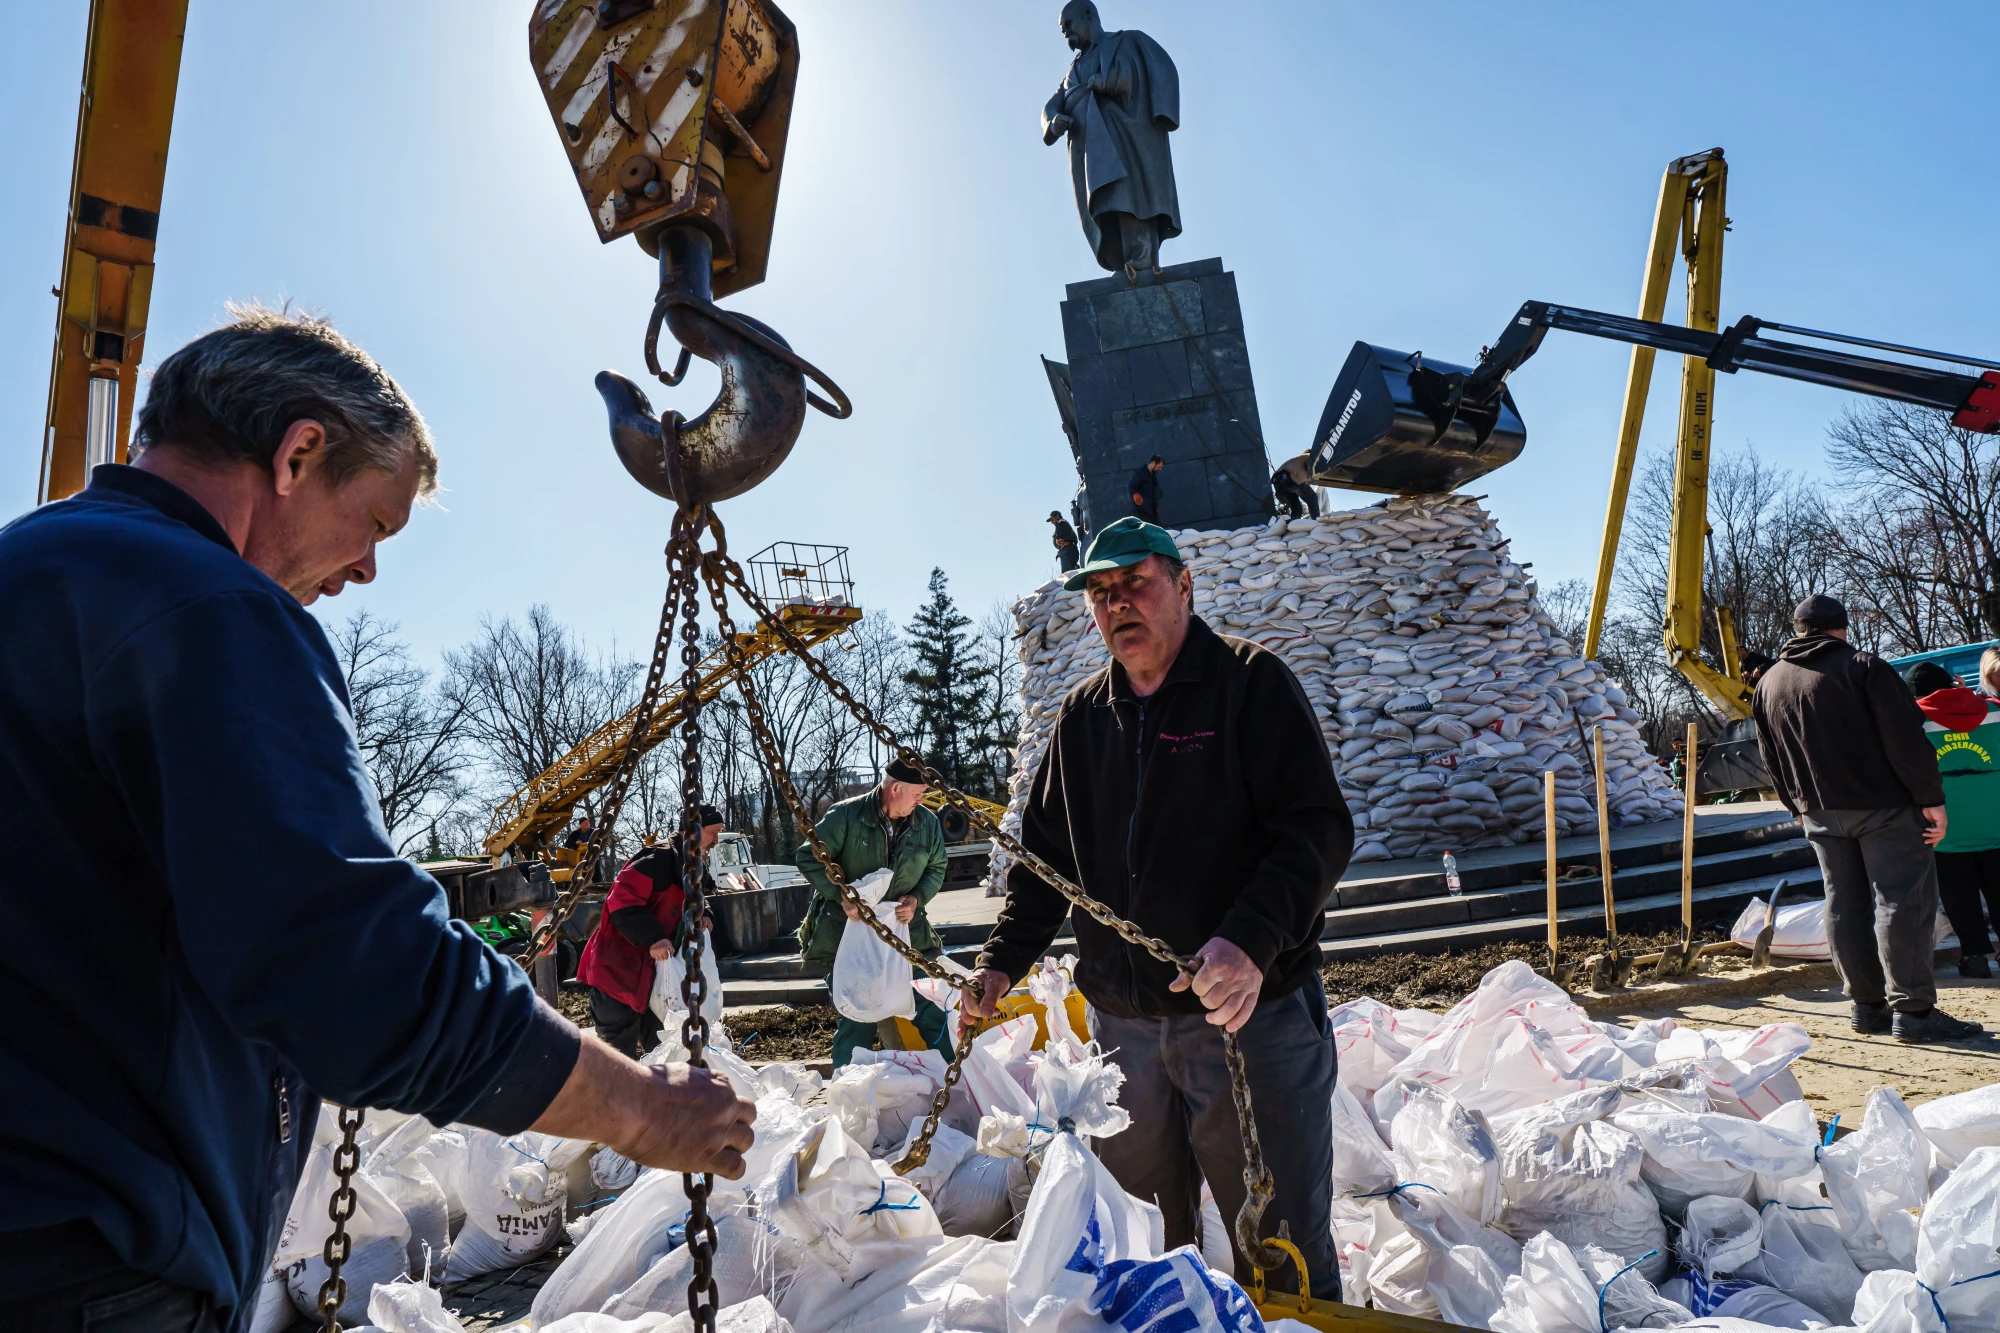 Dozens of volunteers pack sandbags and stack them around the Taras Shevchenko Monument in Kharkiv.